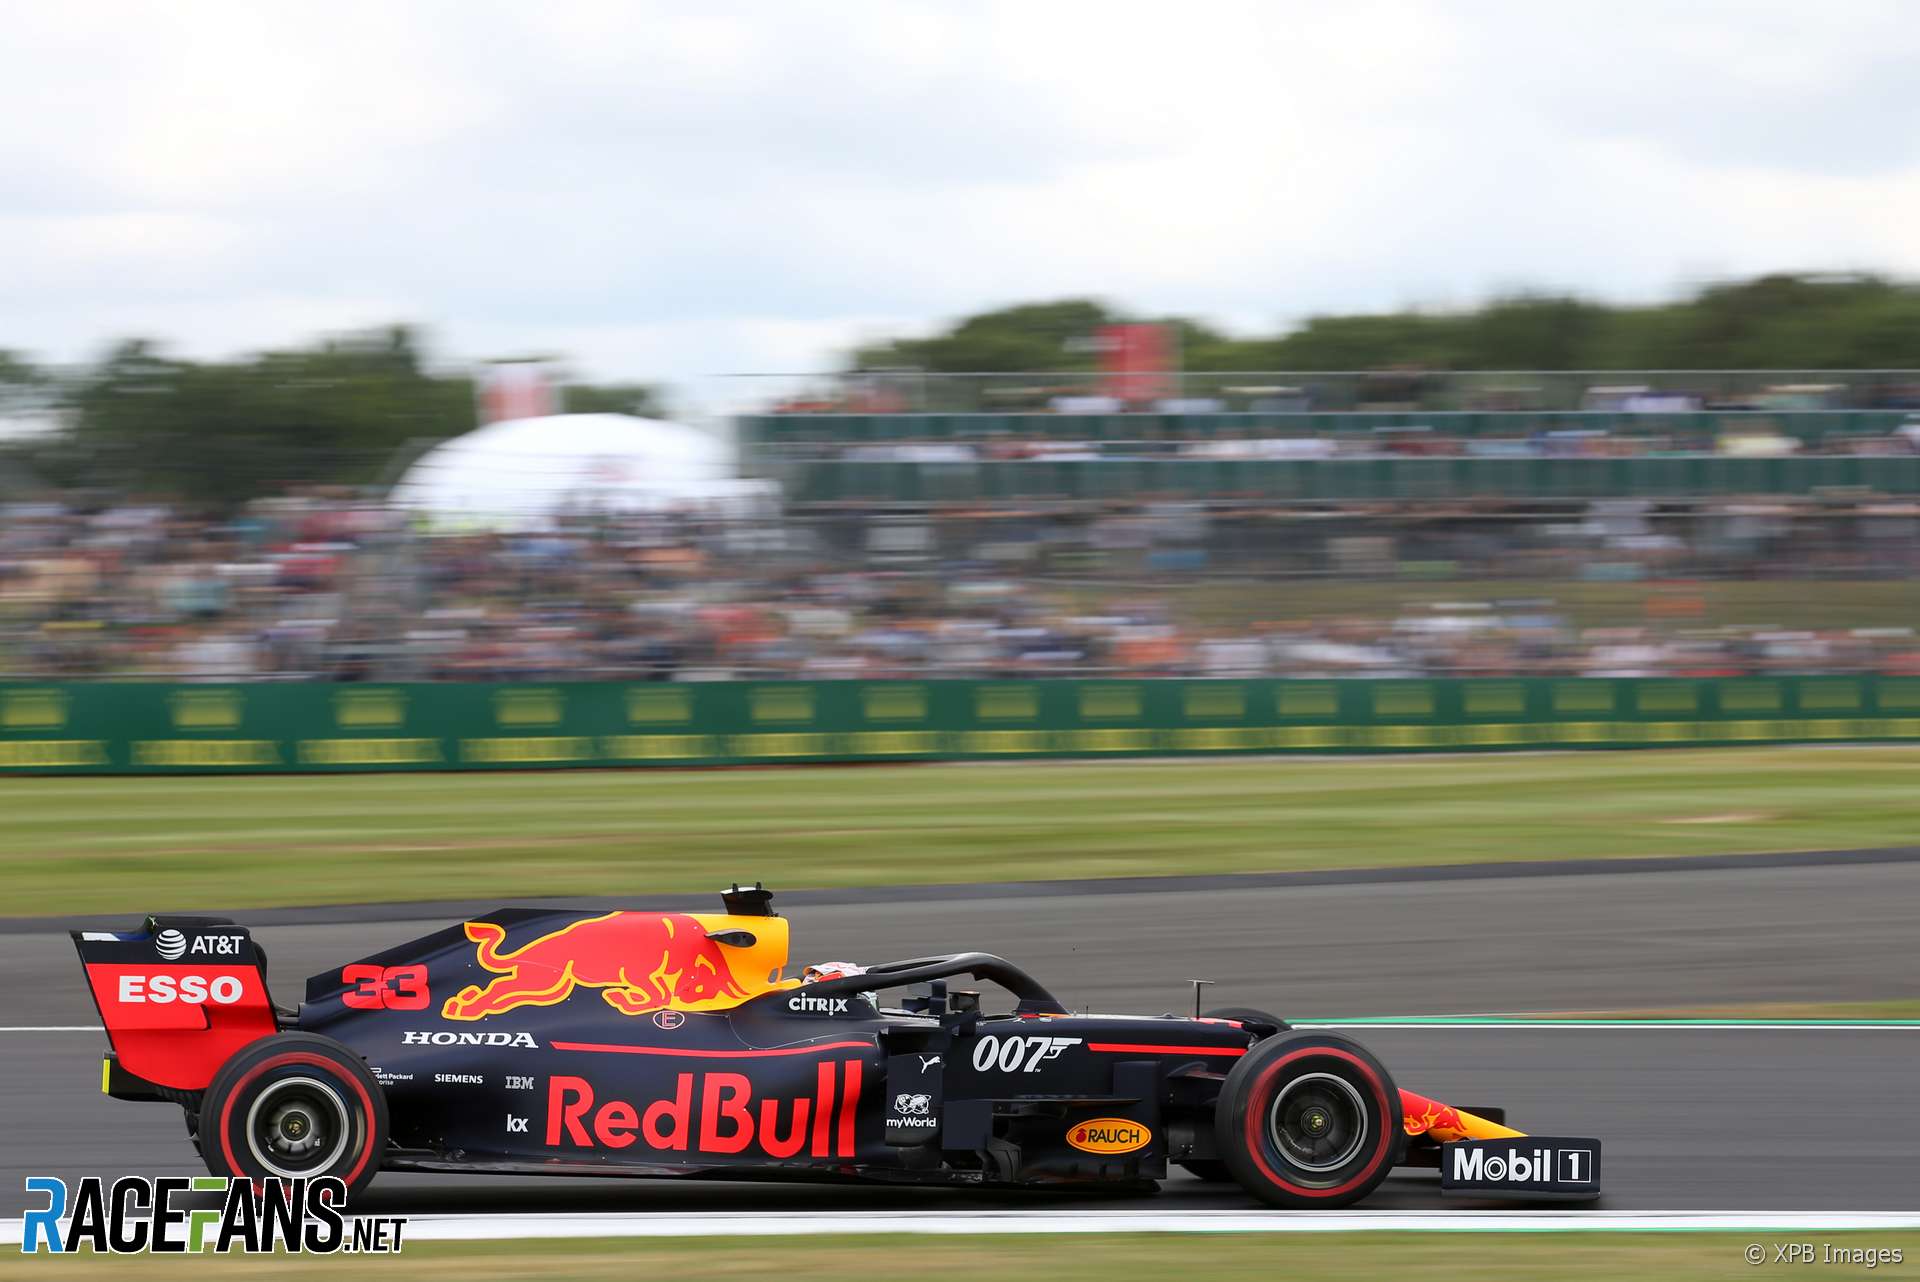 Max Verstappen, Red Bull, Silverstone, 2019